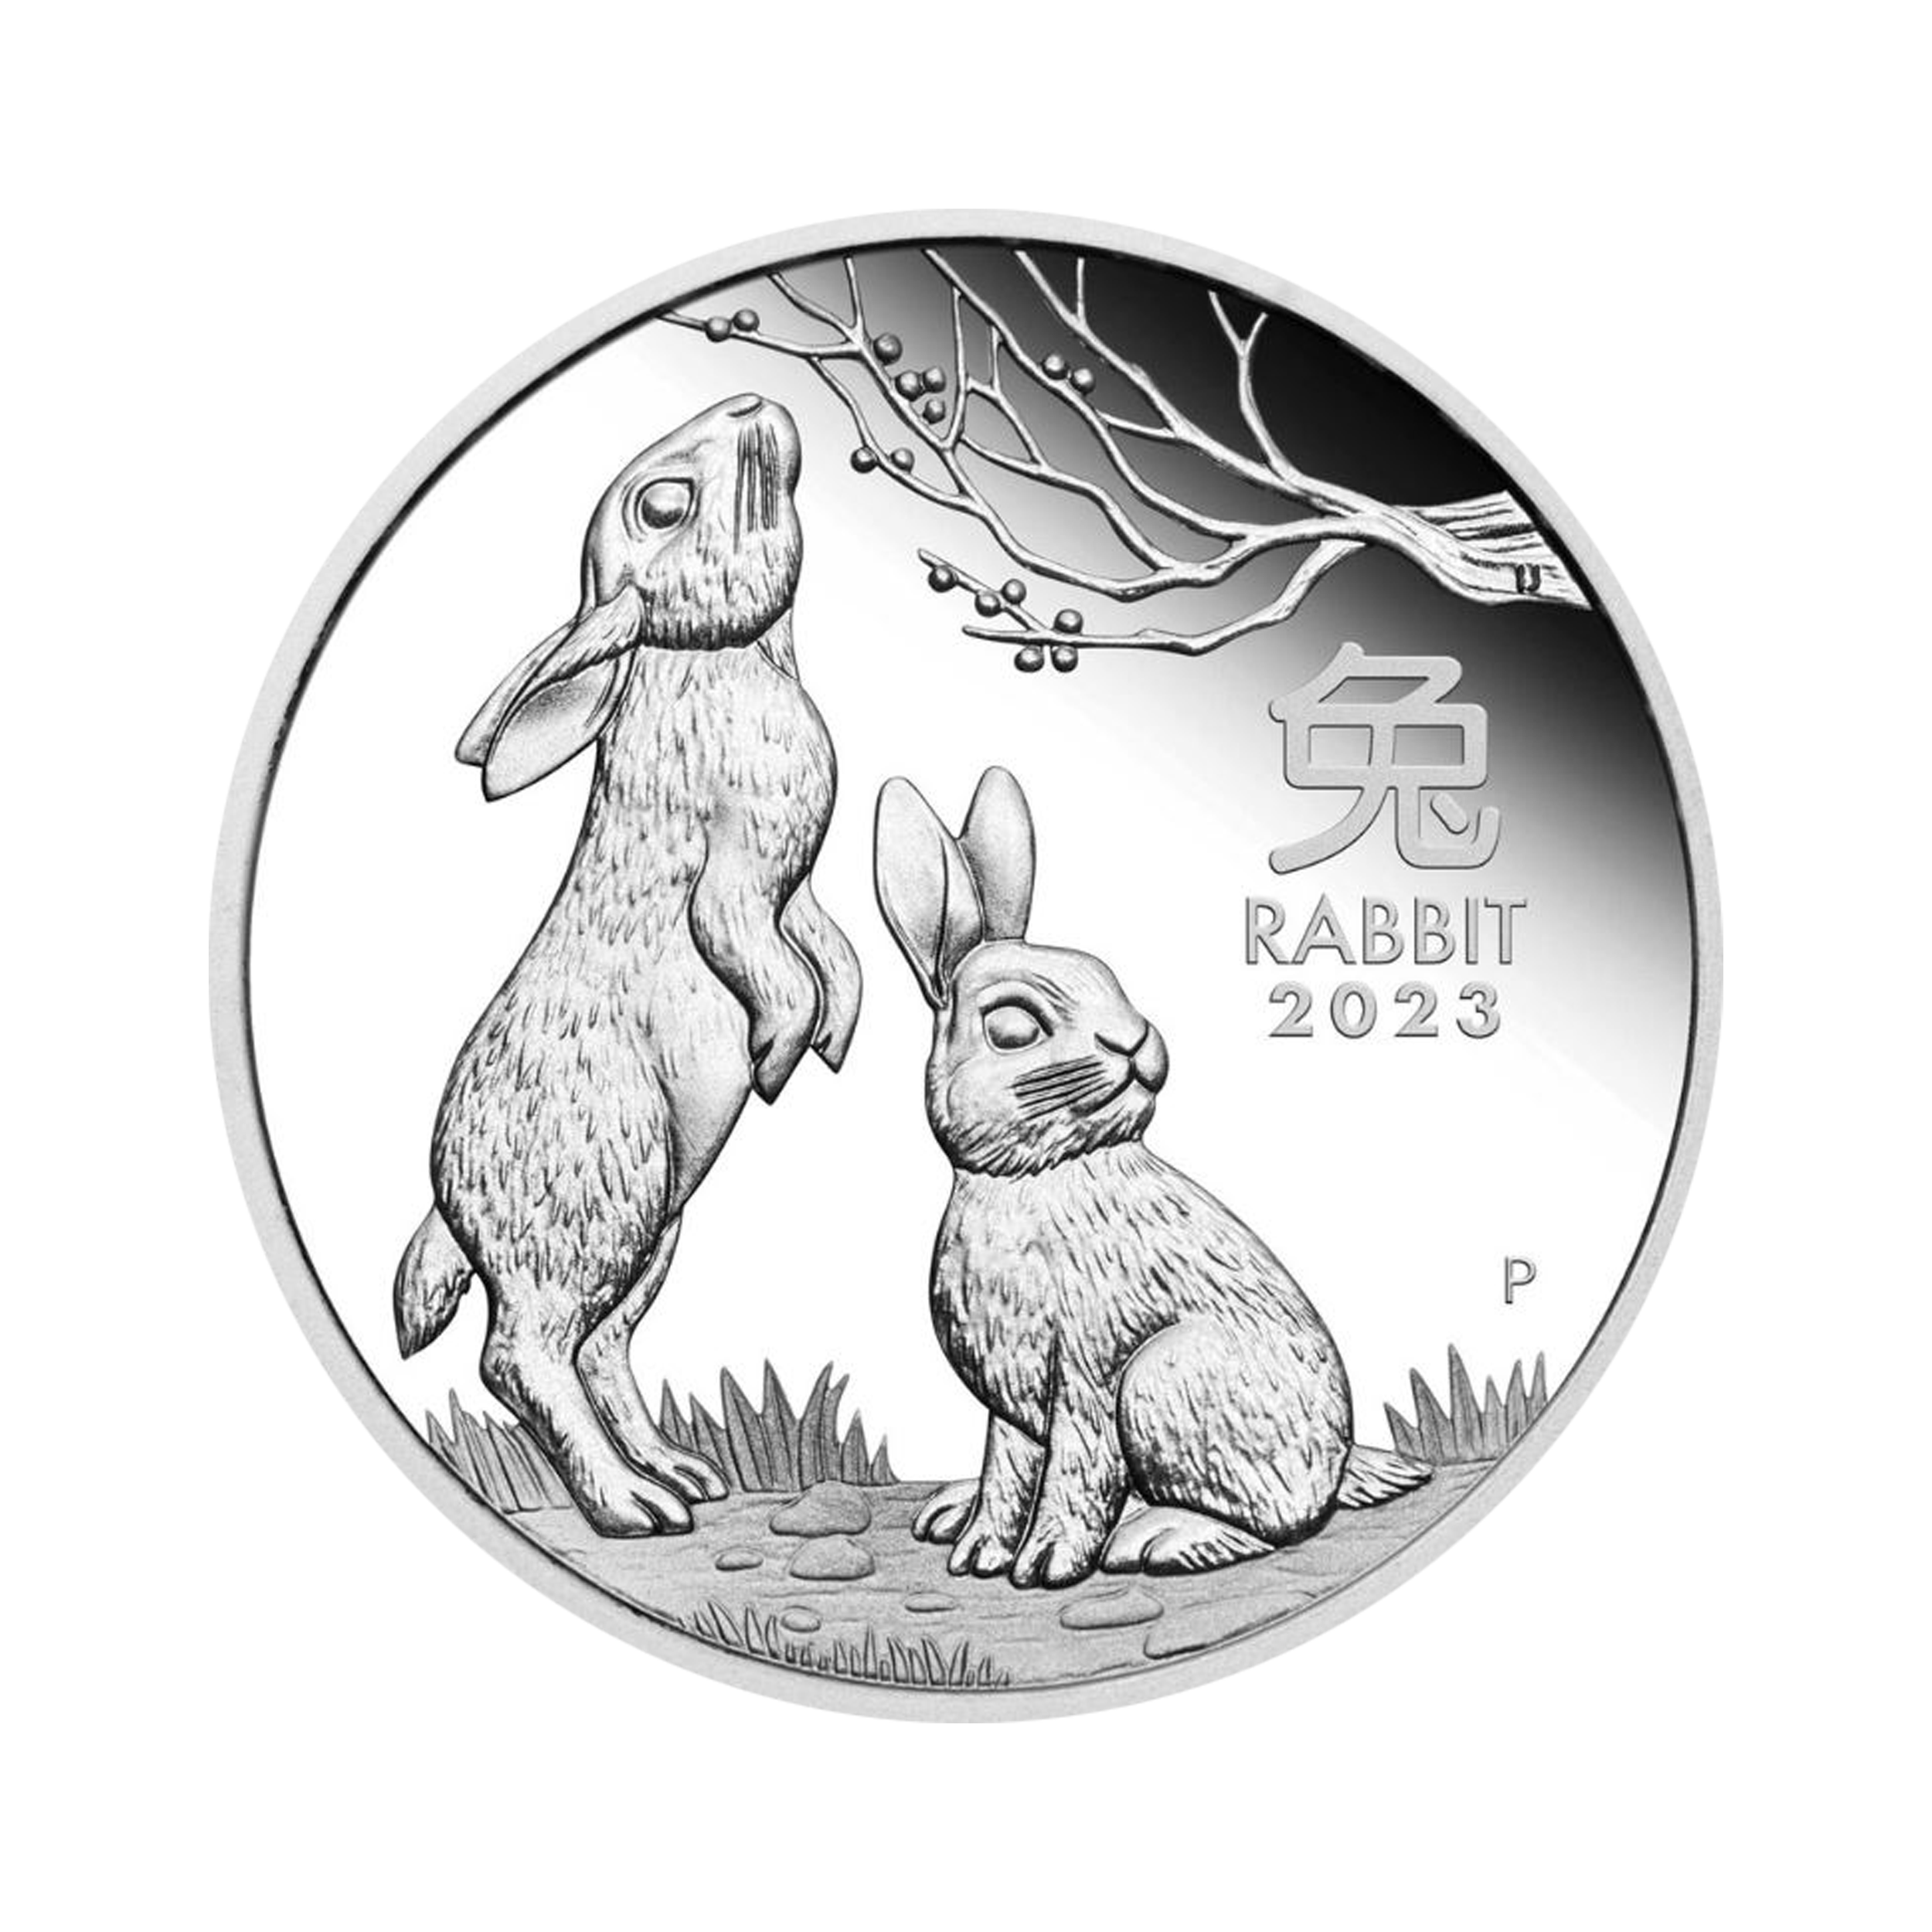 1/2 troy ounce silver coin Lunar 2023 proof